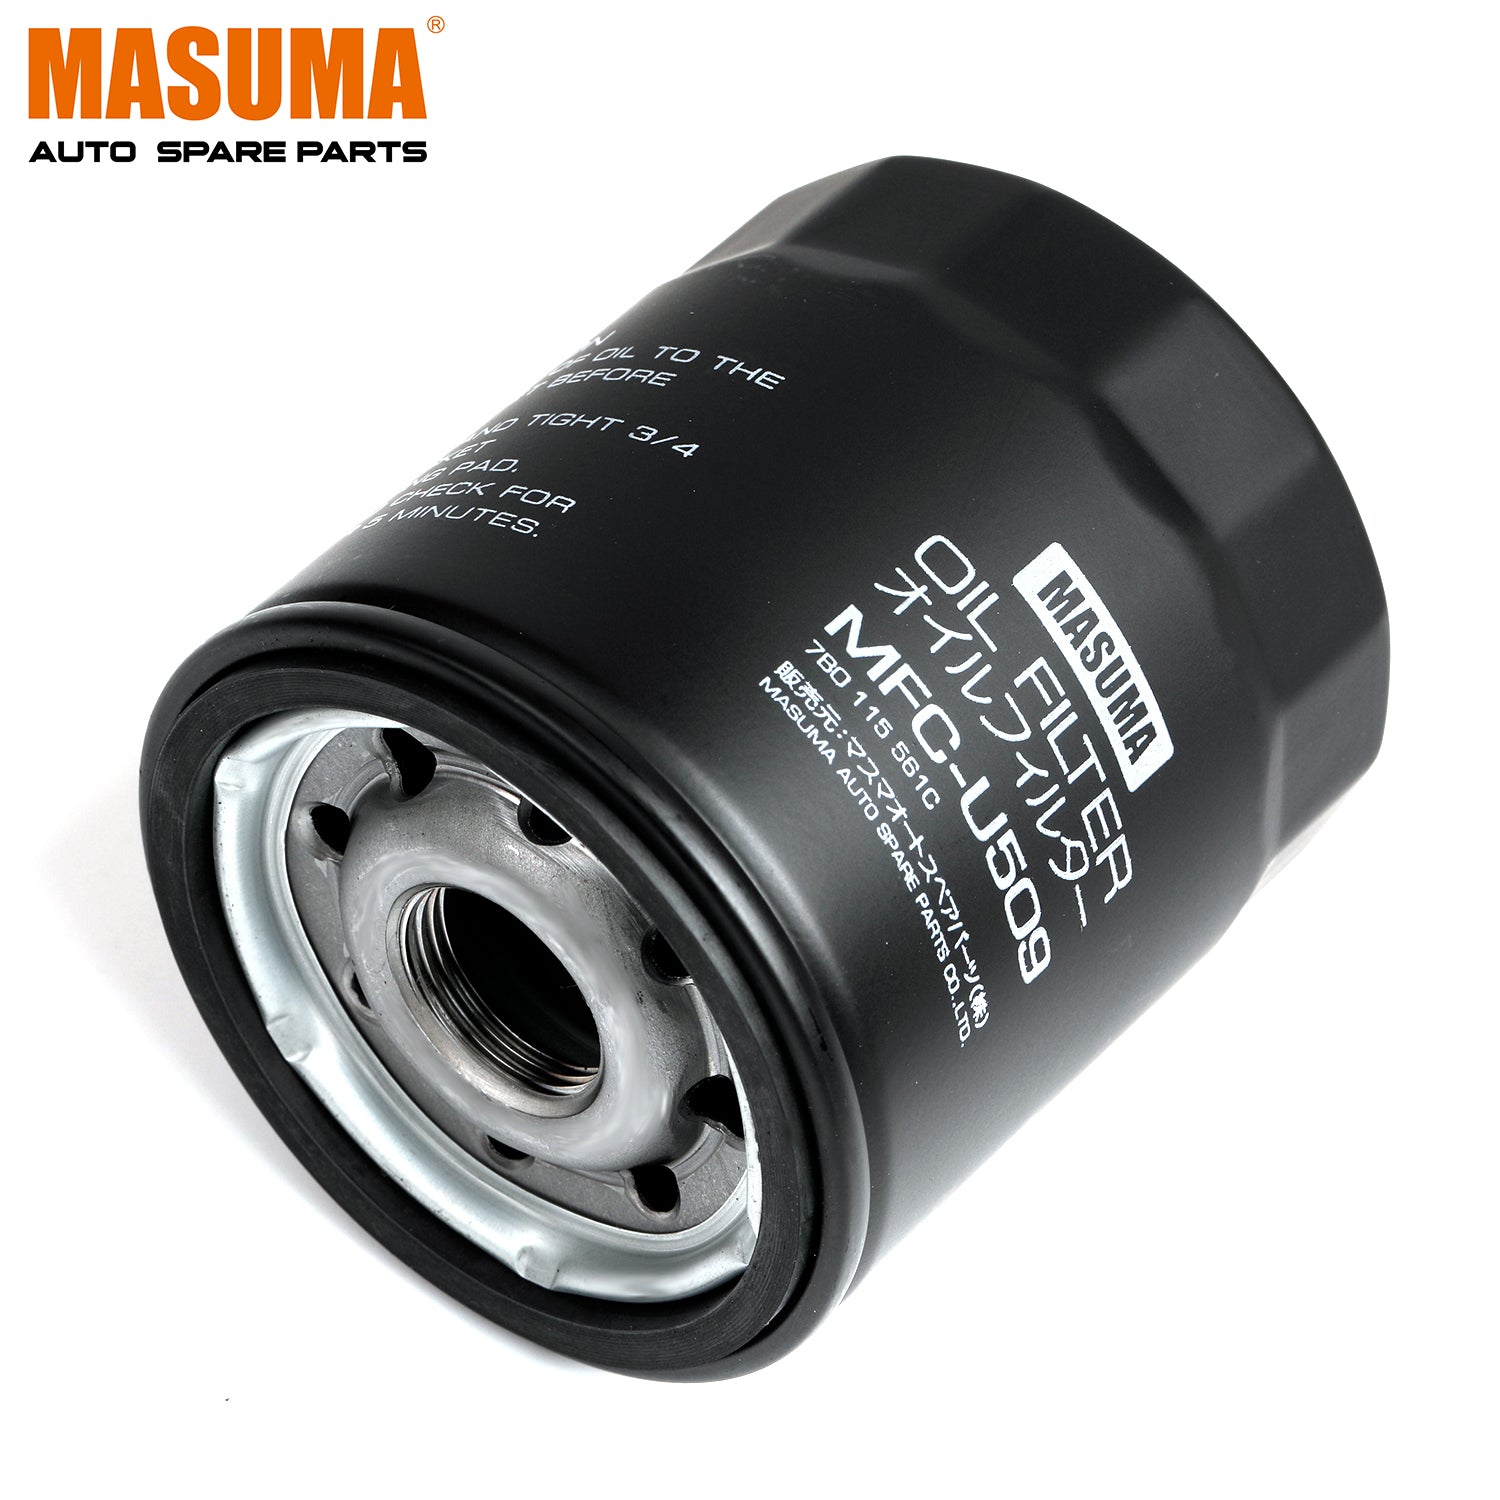 MFC-U509 MASUMA Brand high quality Auto car parts engine Oil filter